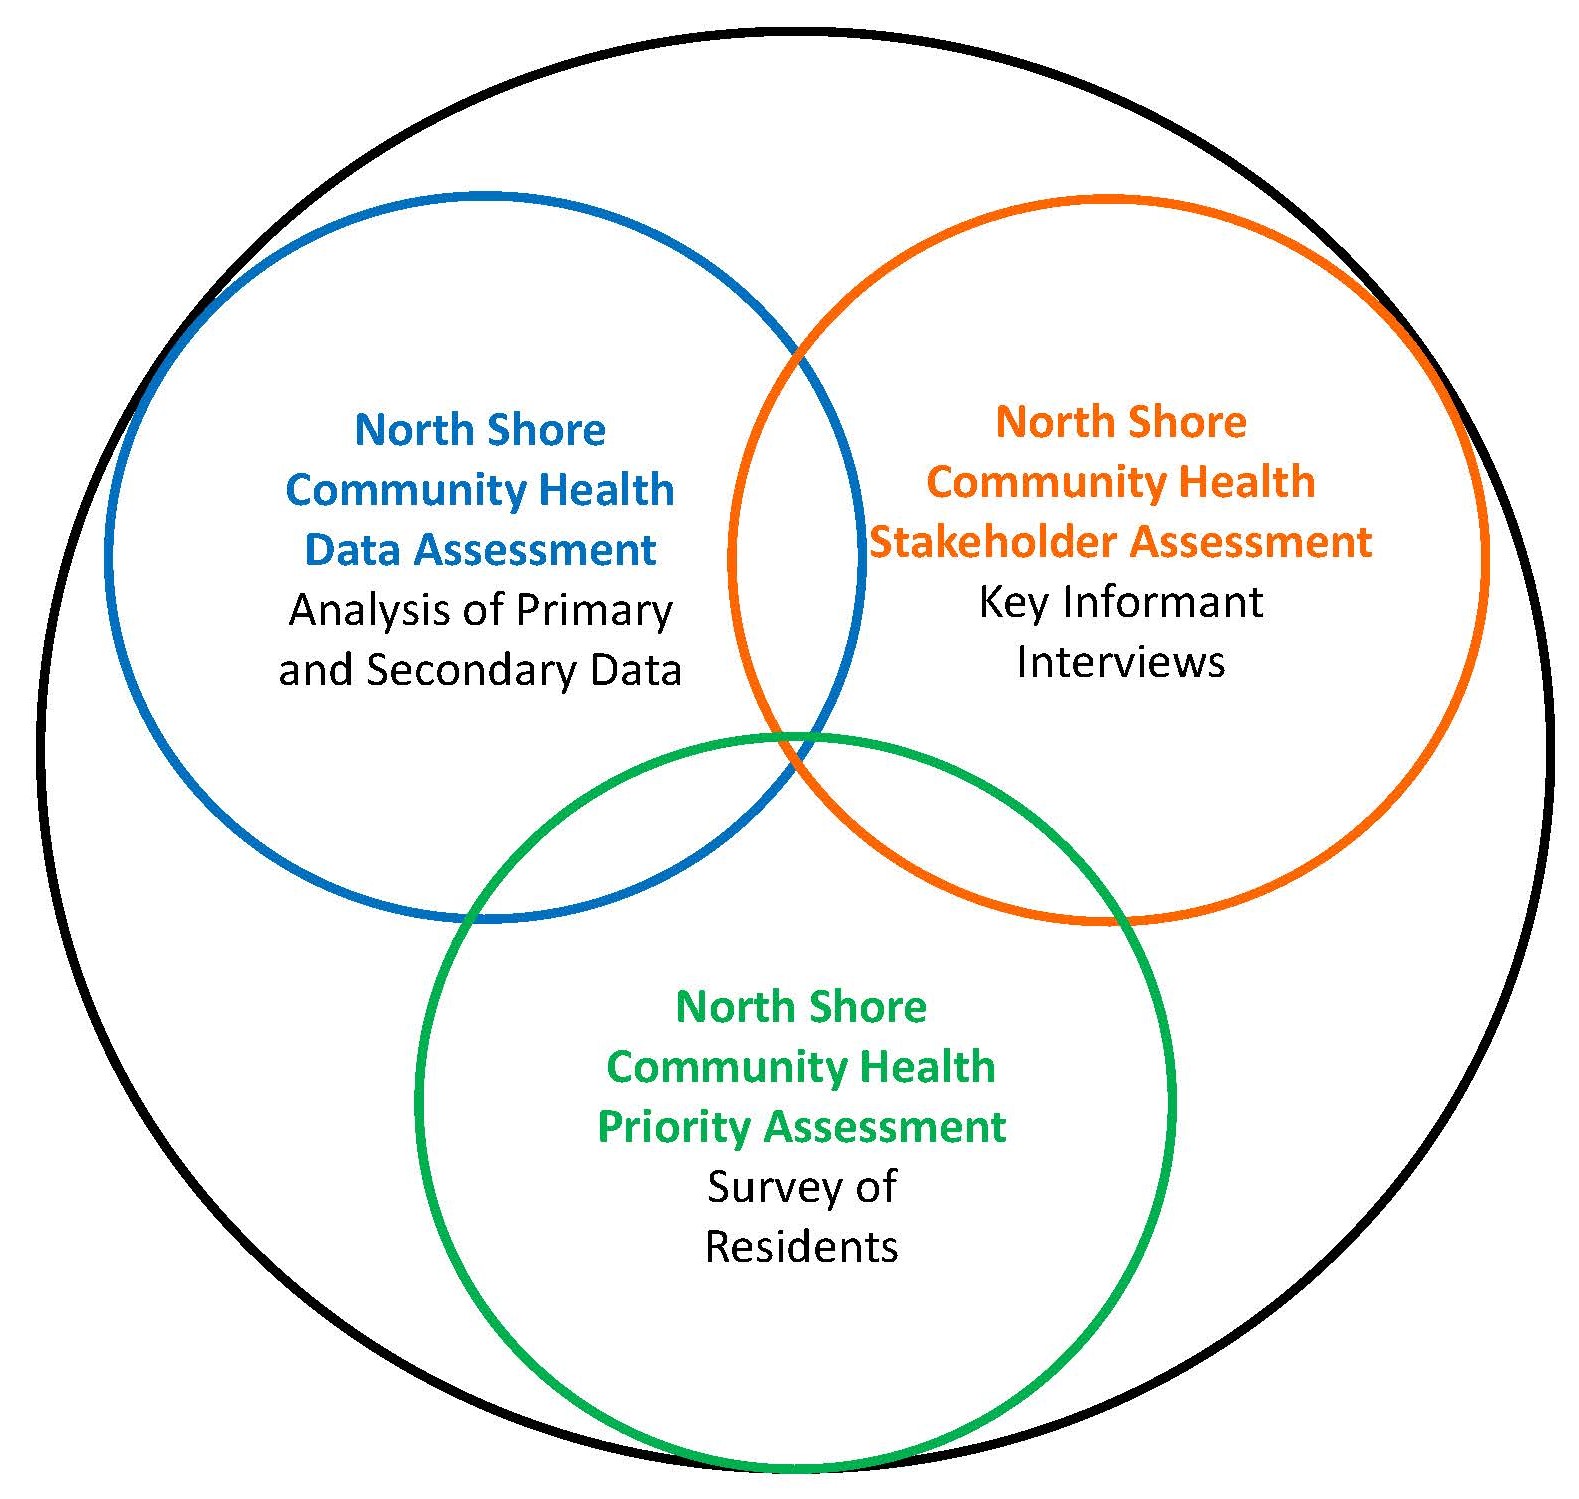 Community Health Assessment